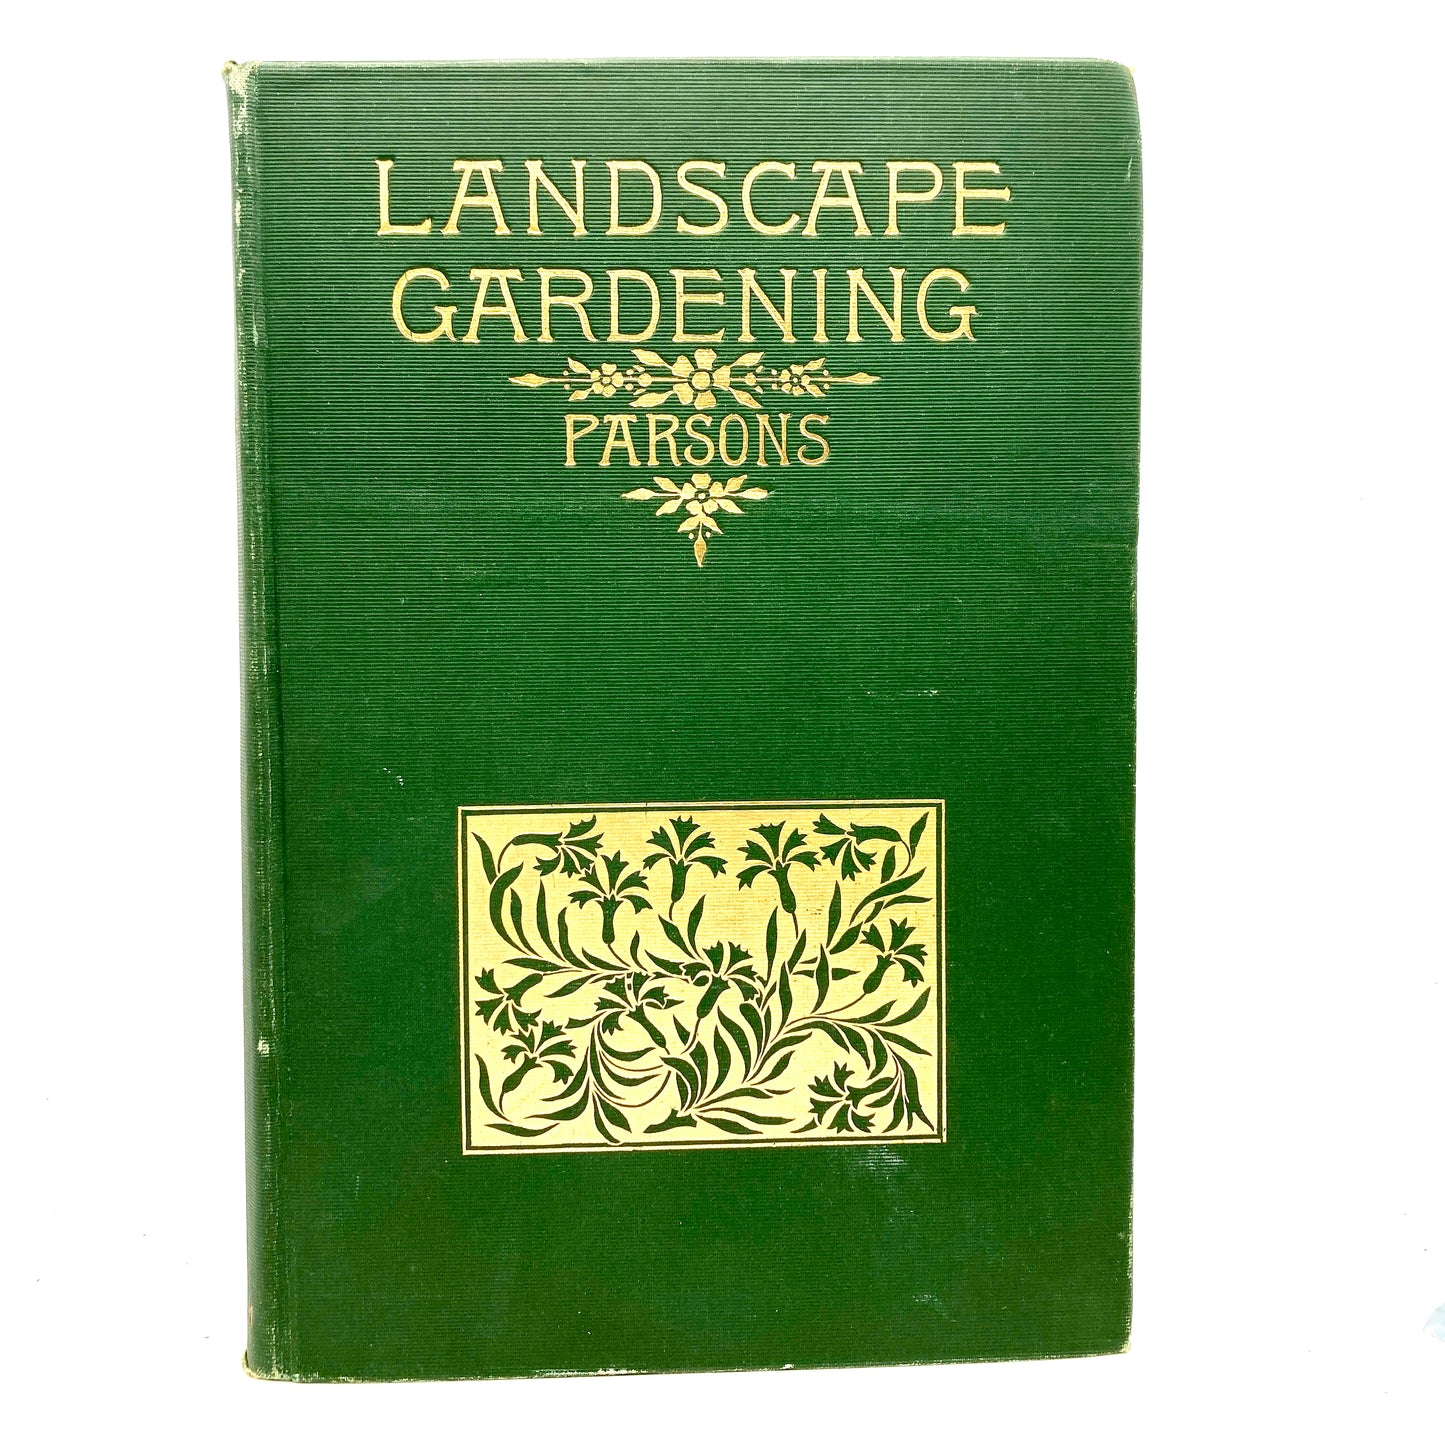 PARSONS, Samuel "Landscape Gardening" [G.P. Putnam's, 1904]